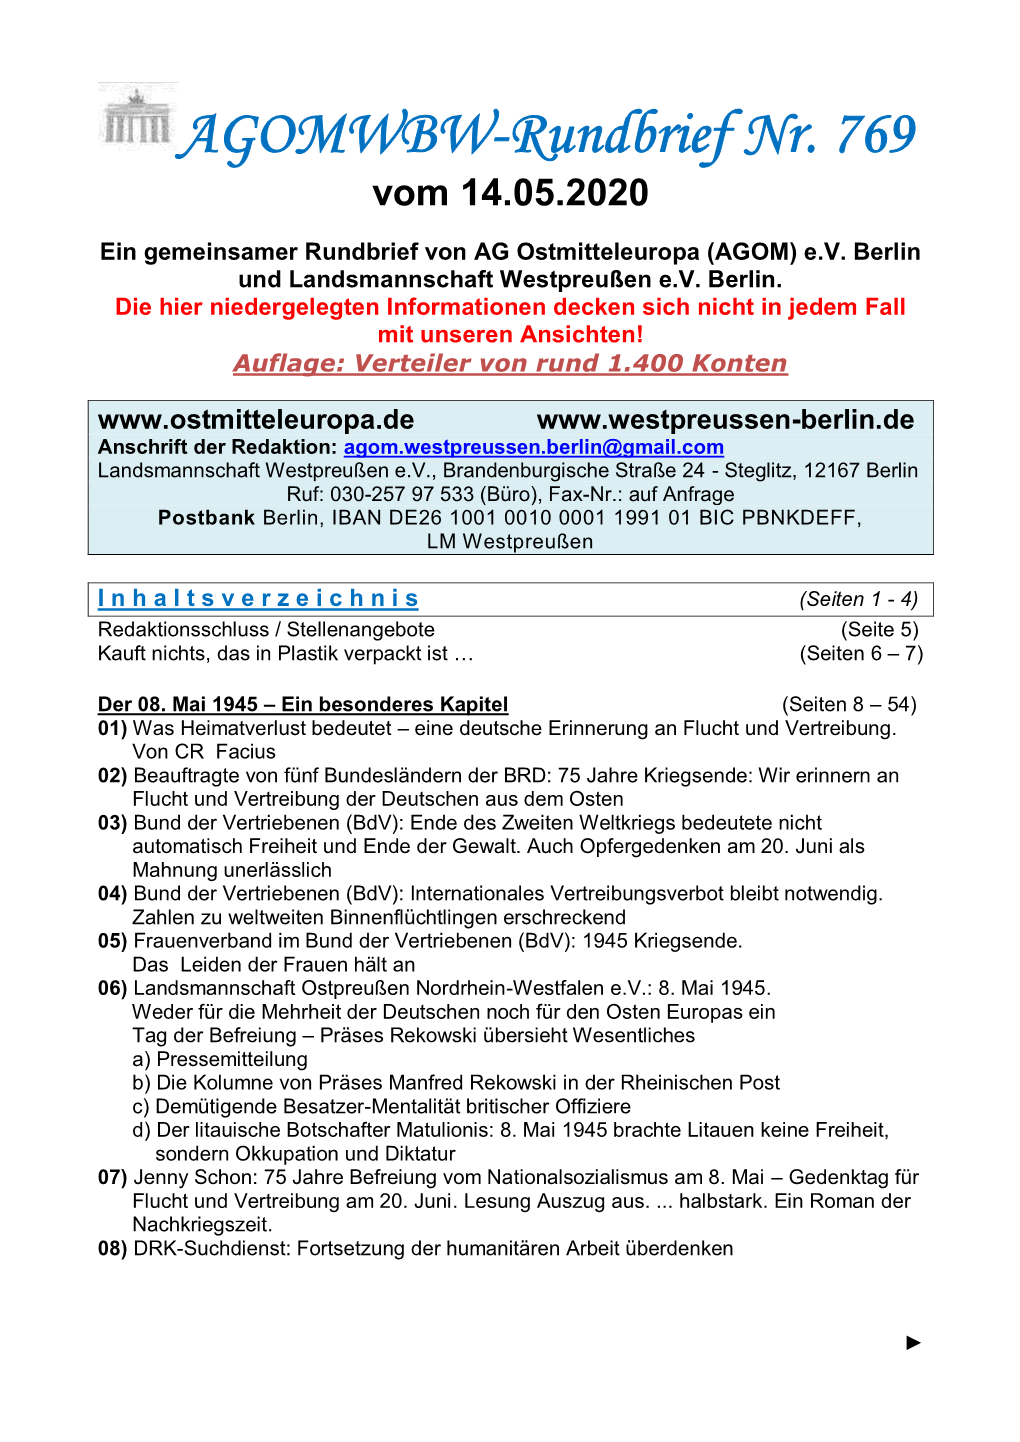 AGOMWBW-Rundbrief Nr. 769 Vom 14.05.2020